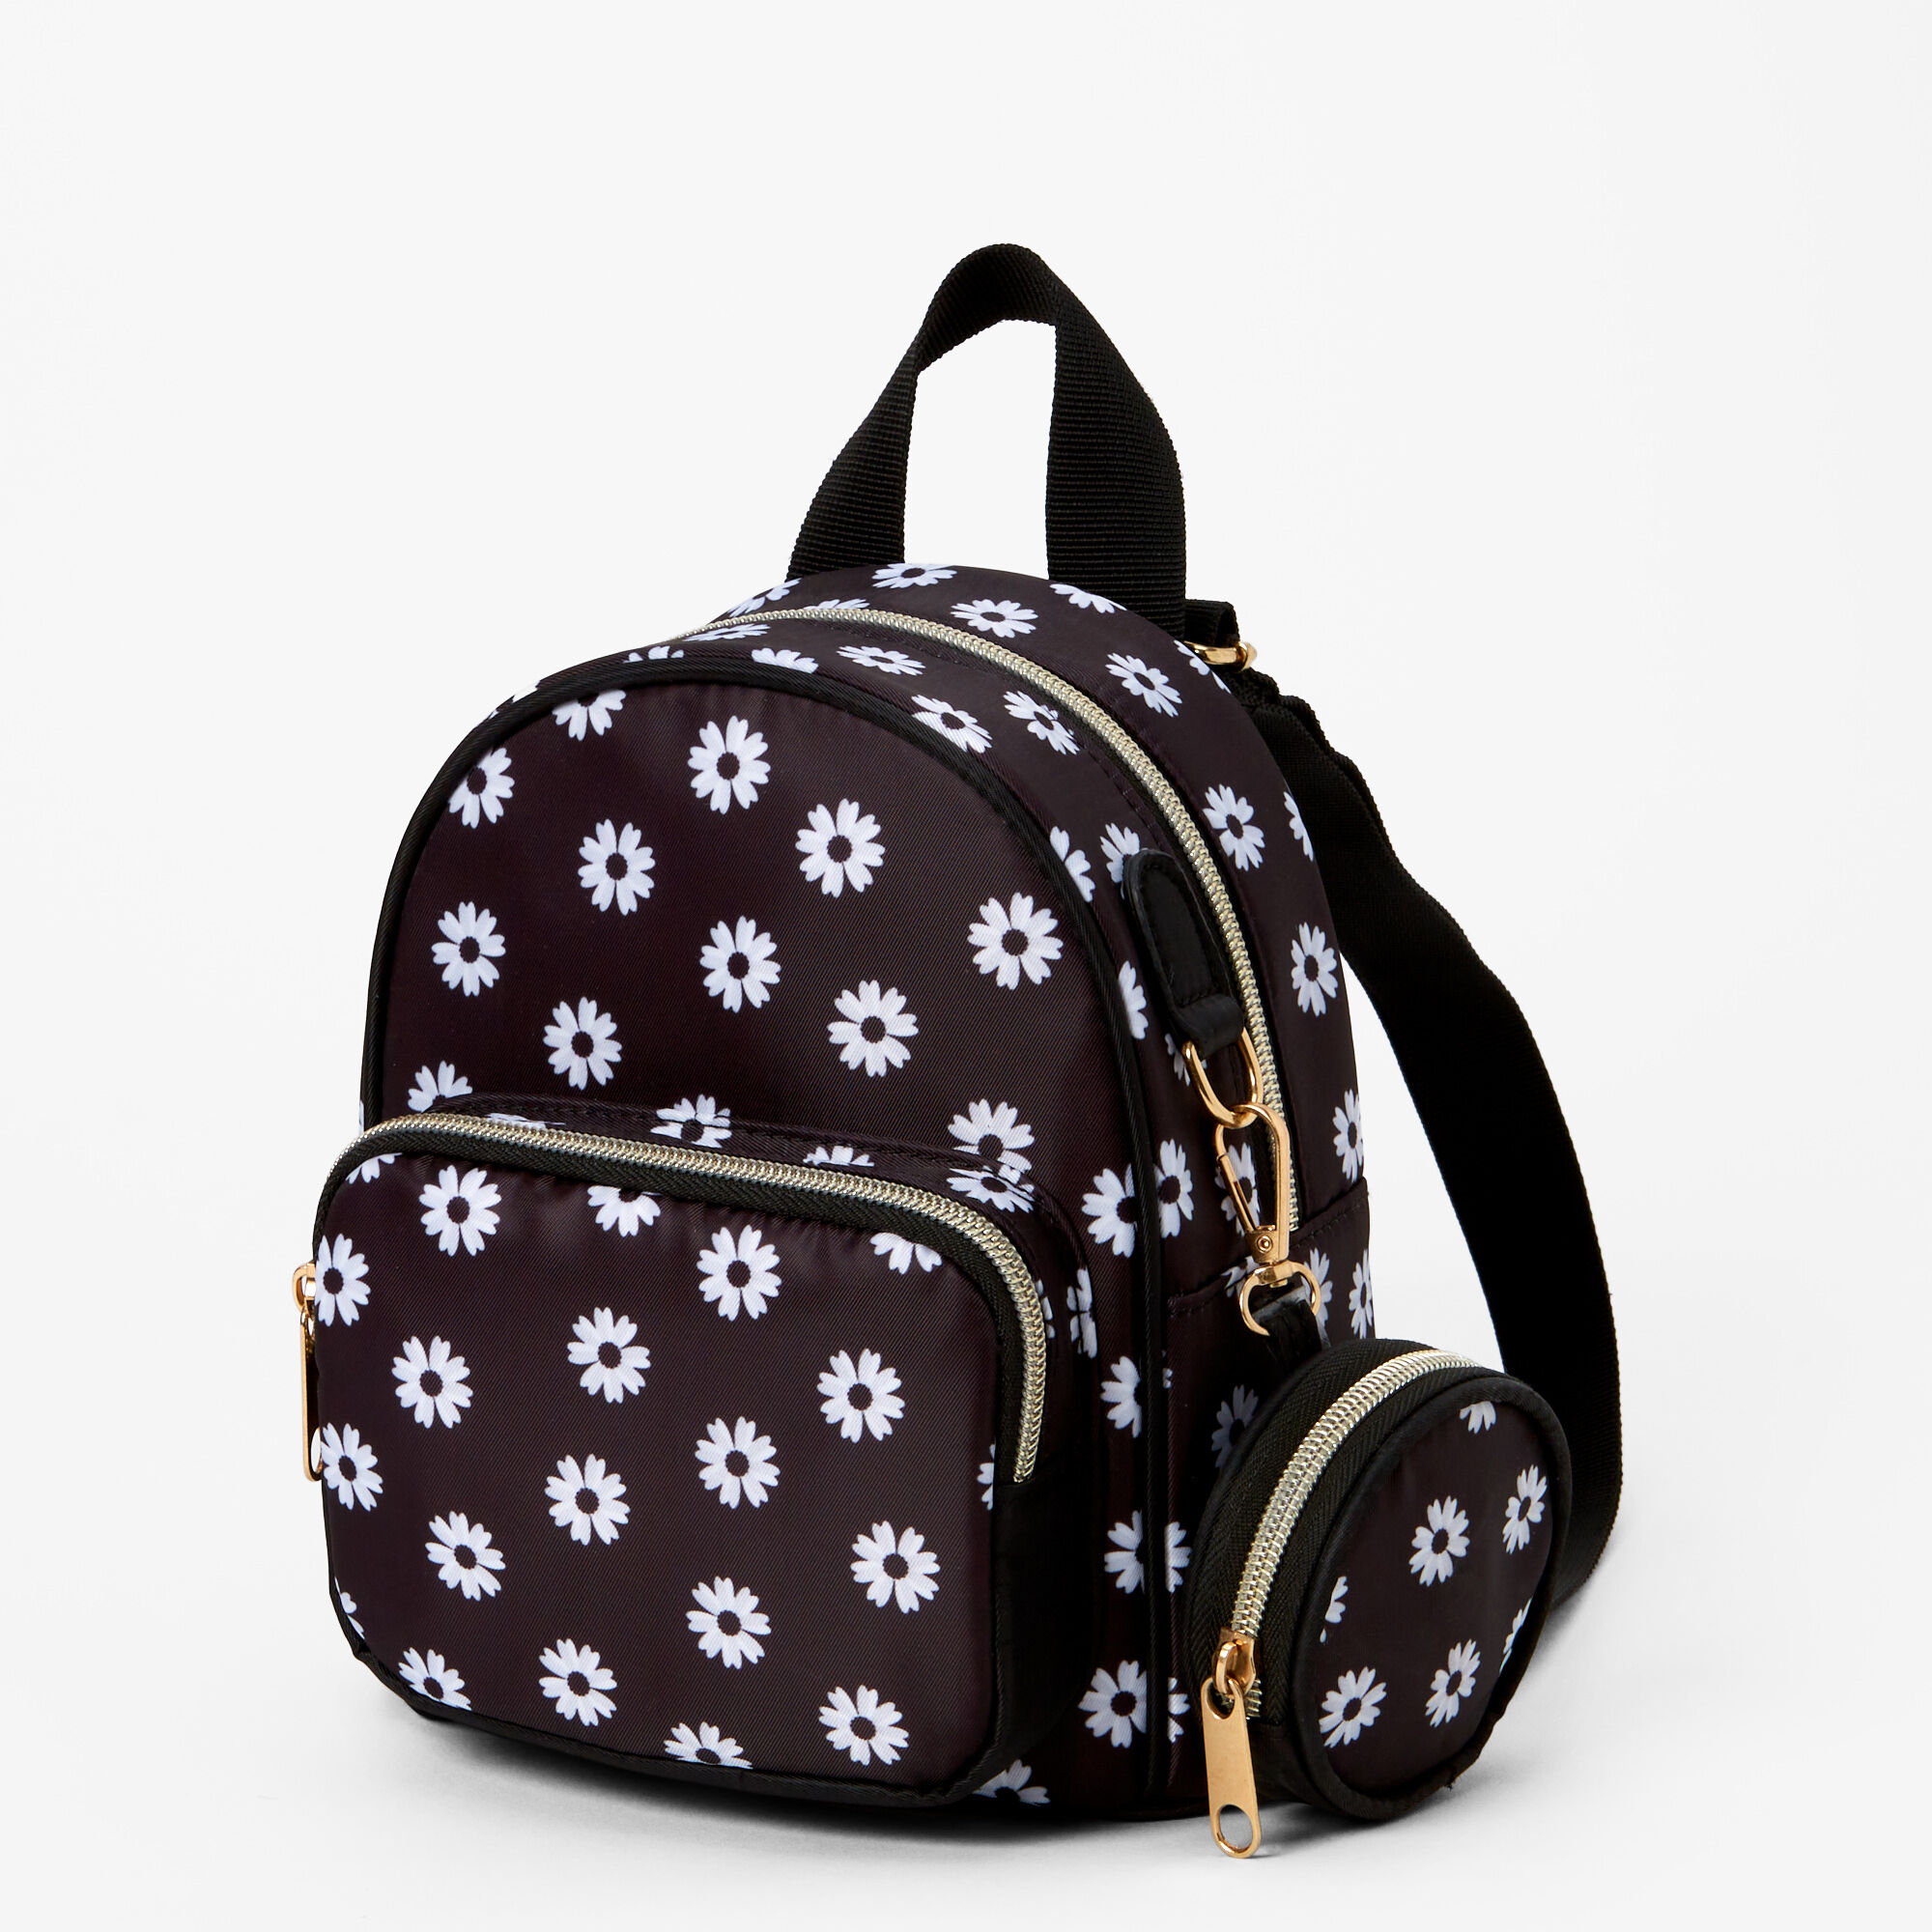 Underonesky Black & Gold Daisy & BumbleBee Convertible-Mini  Backpack/Purse-NWT